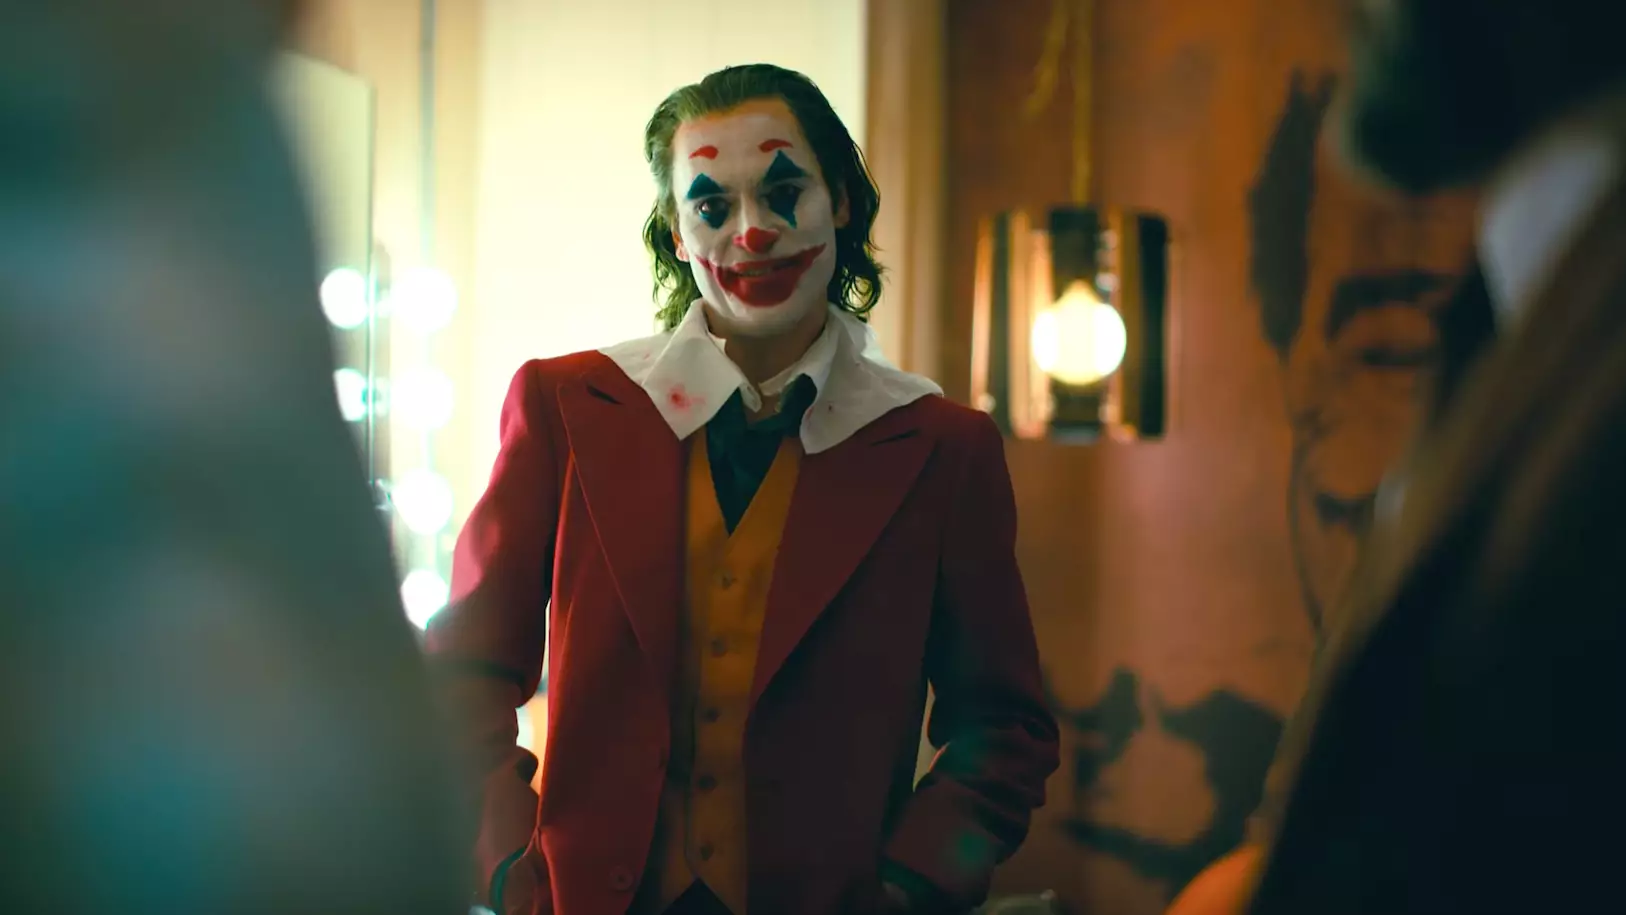 New Trailer For ‘Joker’ Starring Joaquin Phoenix Drops And It Looks So Dark